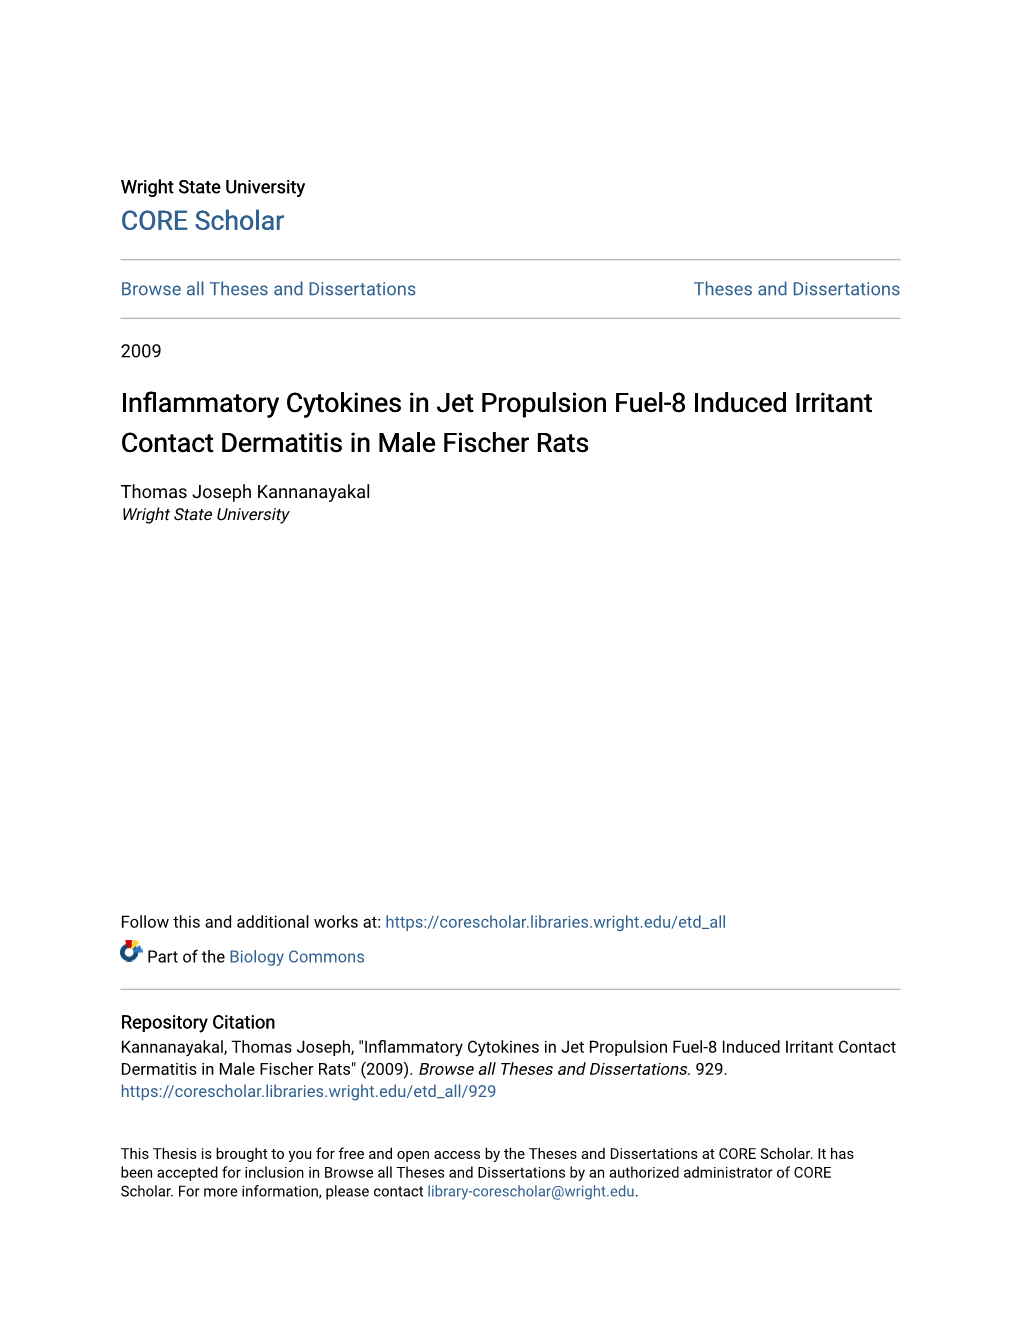 Inflammatory Cytokines in Jet Propulsion Fuel-8 Induced Irritant Contact Dermatitis in Male Fischer Rats